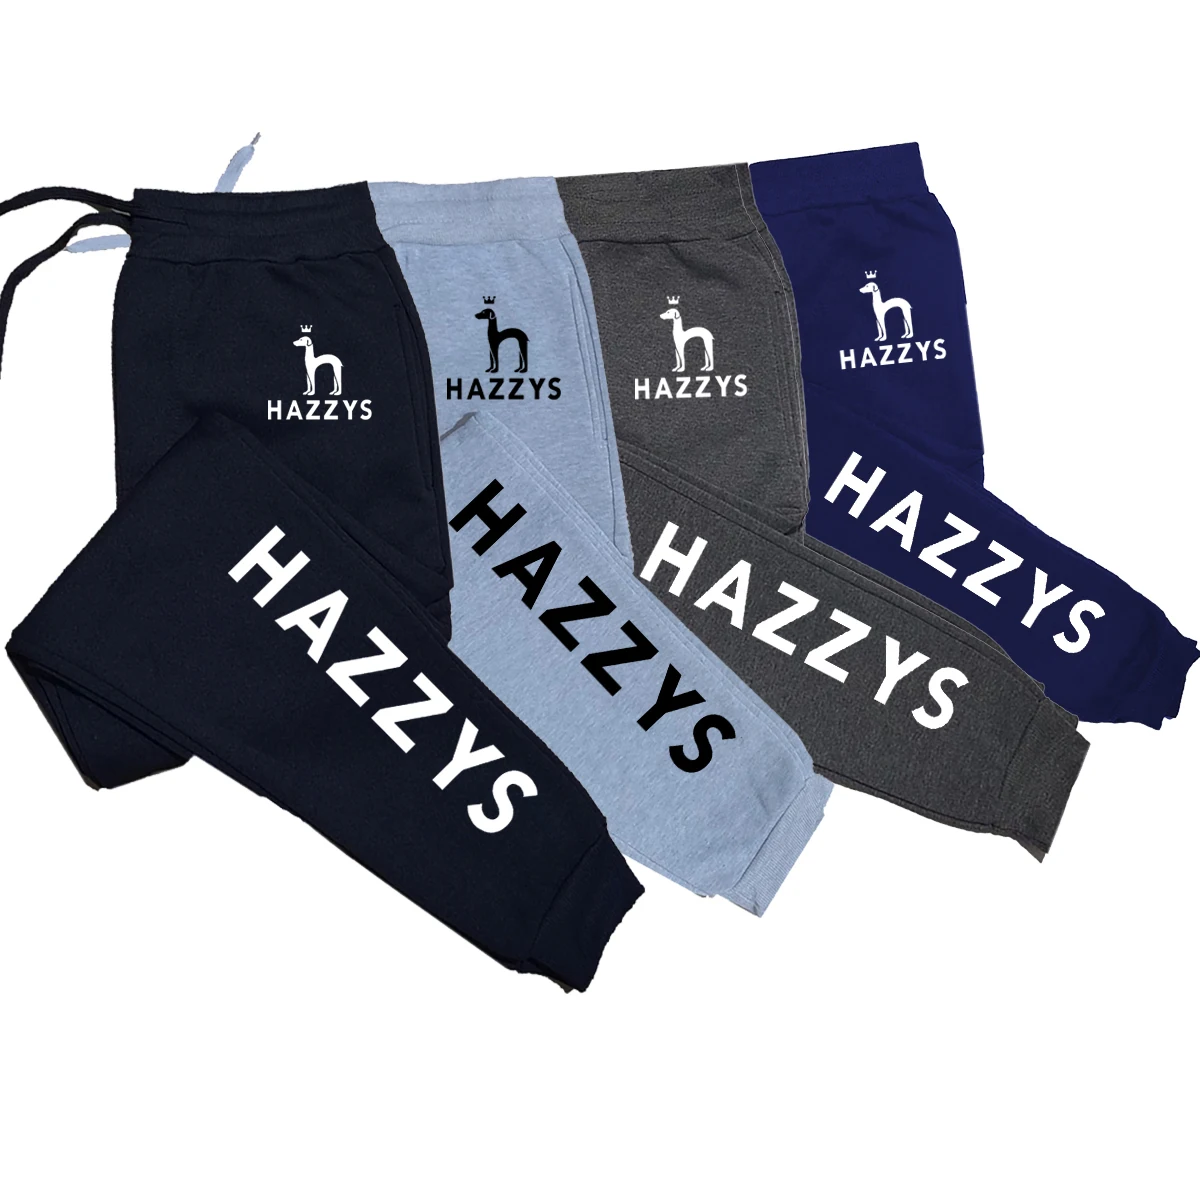 ZAZZYS-Men's Jogging Sweatpants Running Male Sport Fitness Sportswear Breathable Pants Homme Casual Cotton Trousers Pants